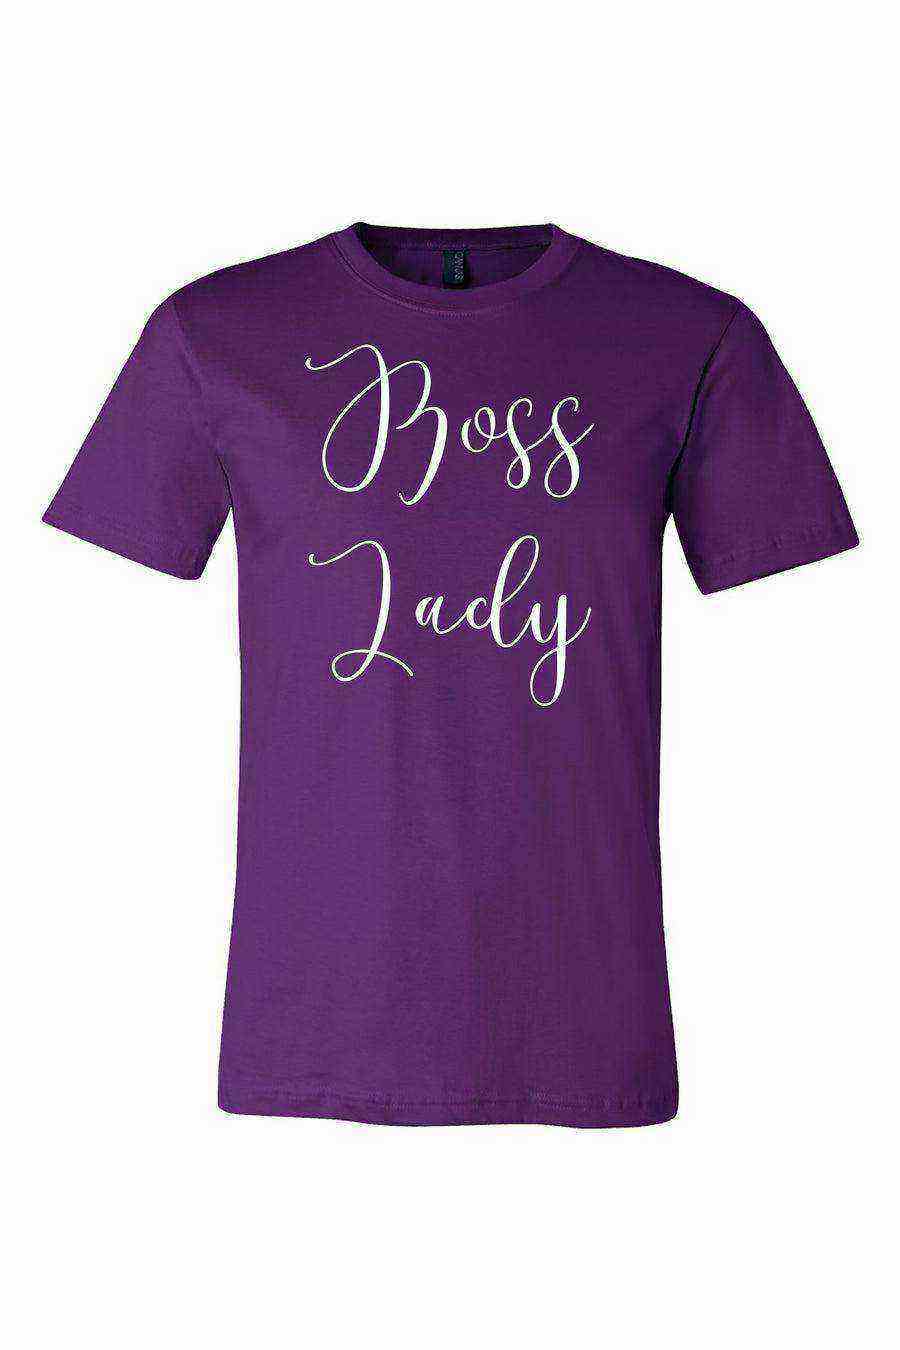 Boss Lady Shirt - Dylan's Tees